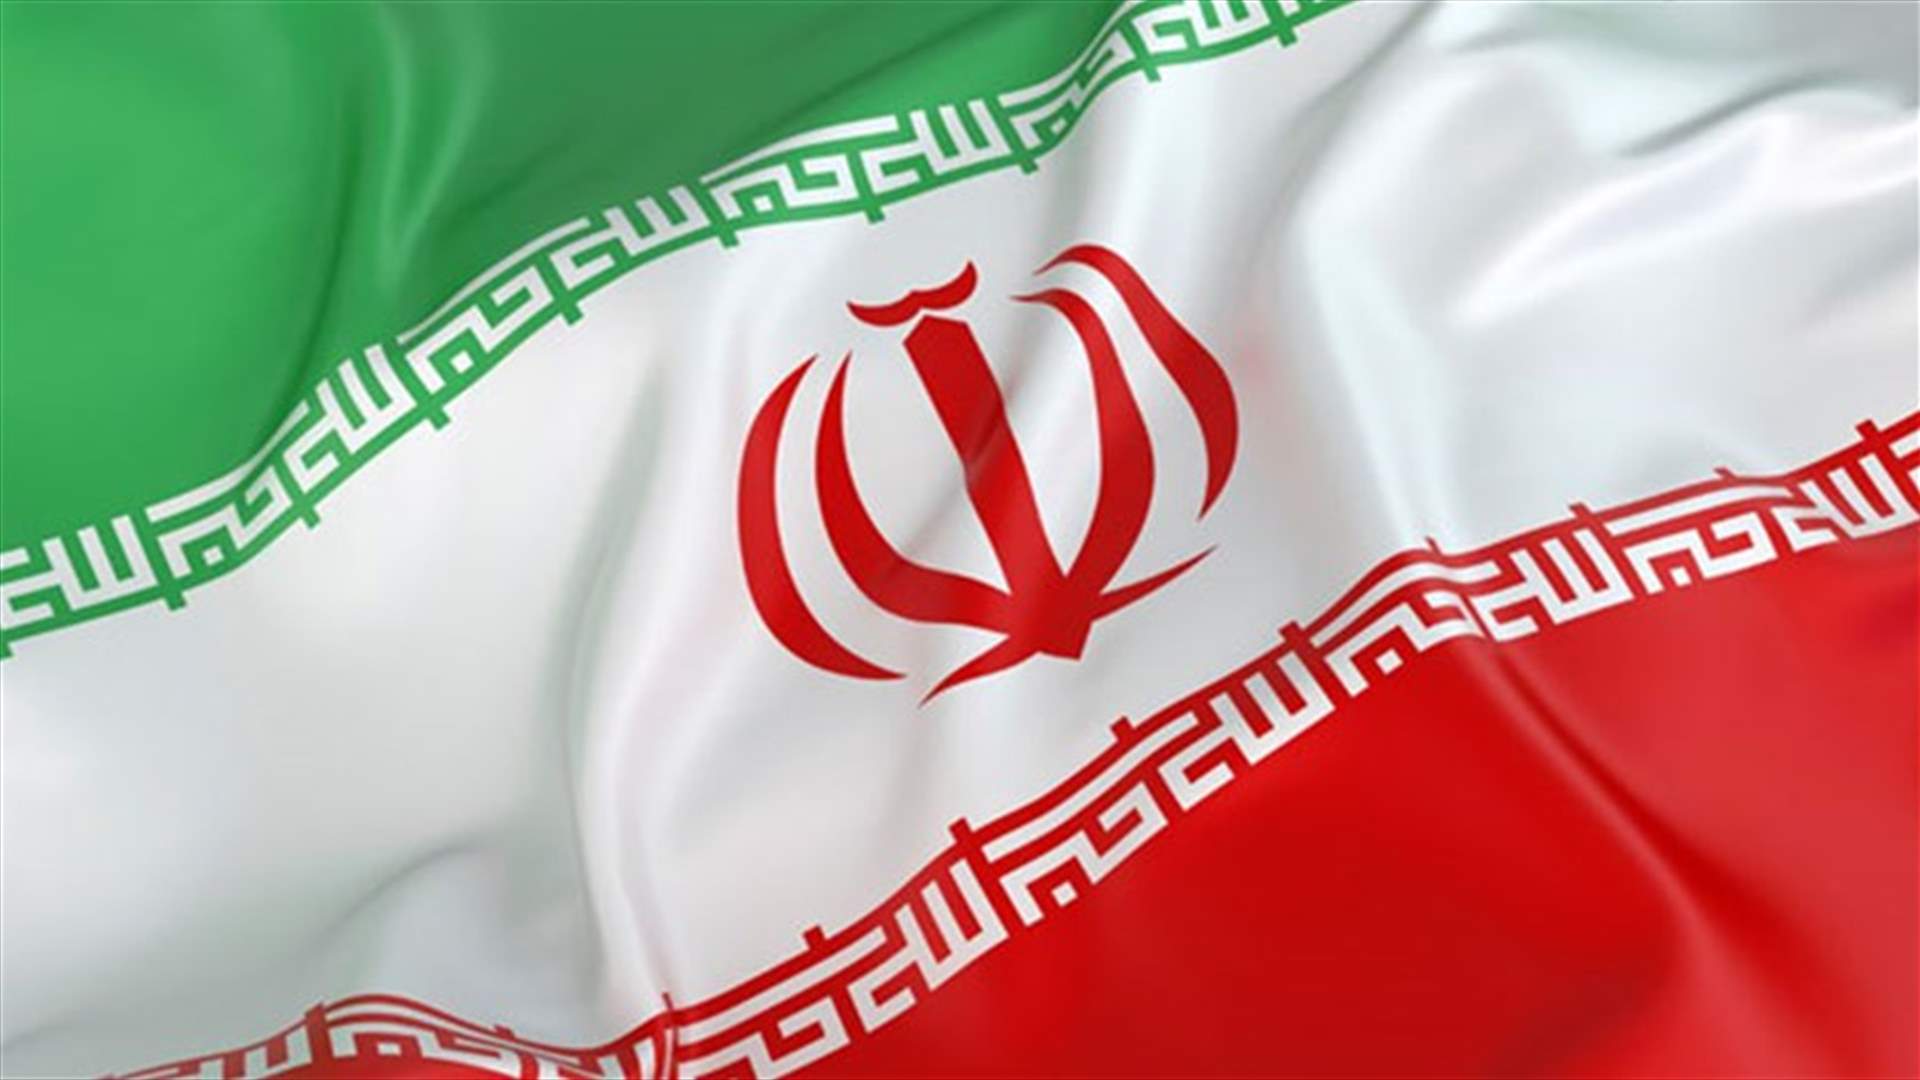 Leader of Sunni militant organization in Iran killed: Intelligence Minister